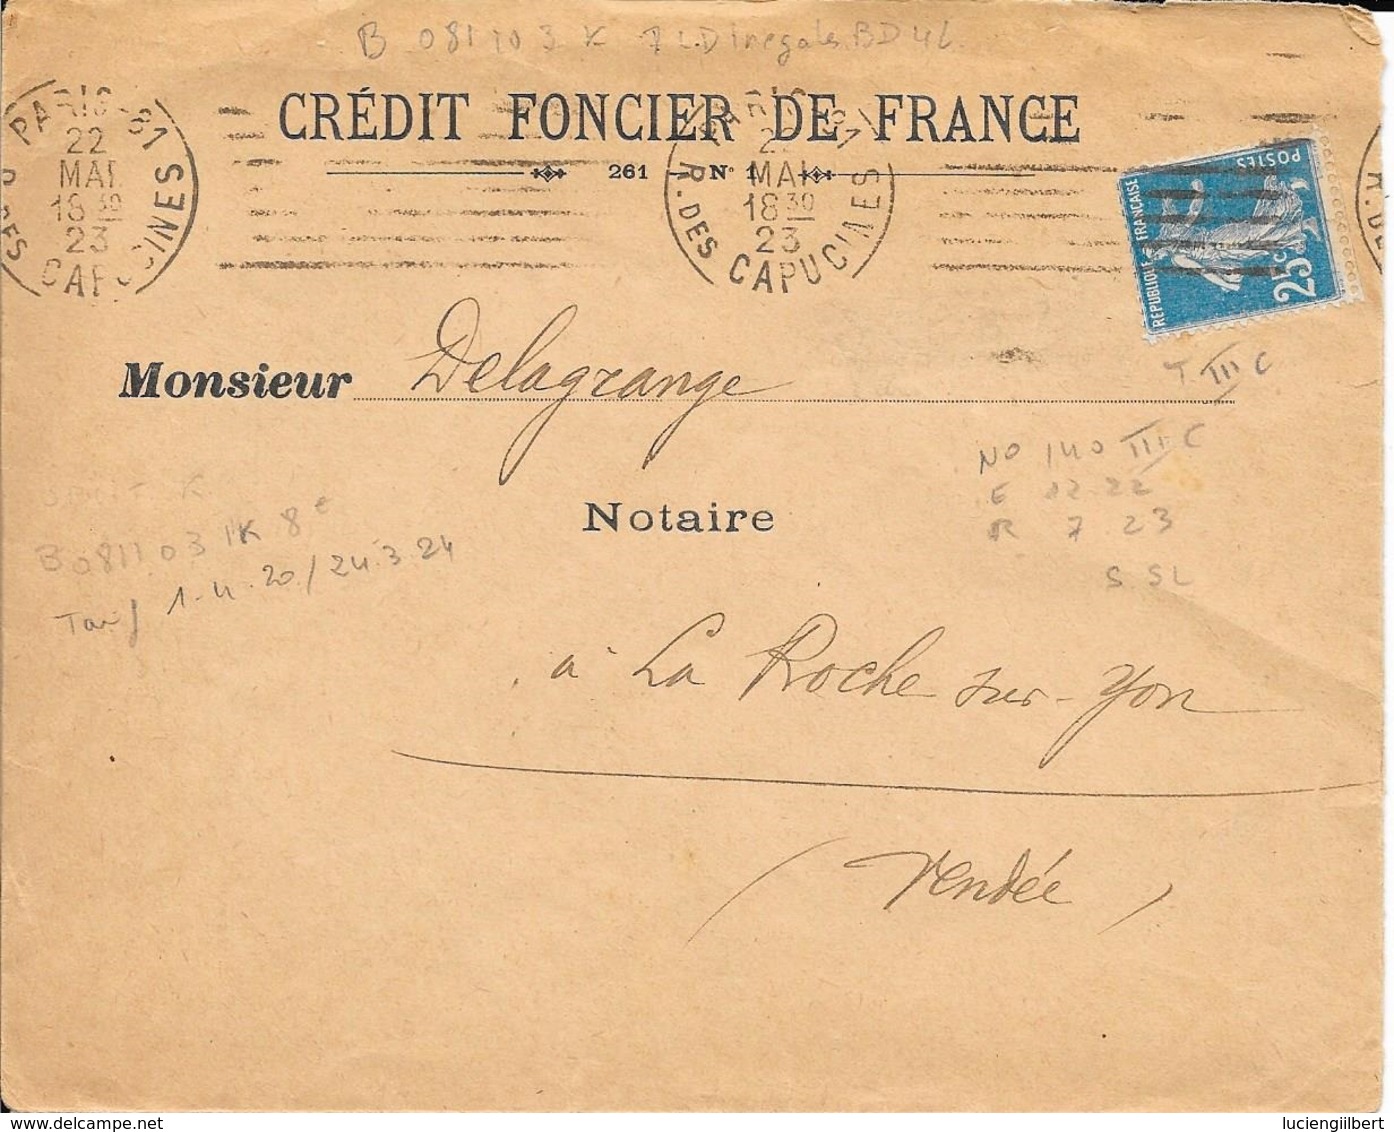 TIMBRE N° 140 III C -  TARIF DU 1 4 1920 - FLAMME N° B 0811 031 K - PARIS 81  - 1923 - Postal Rates